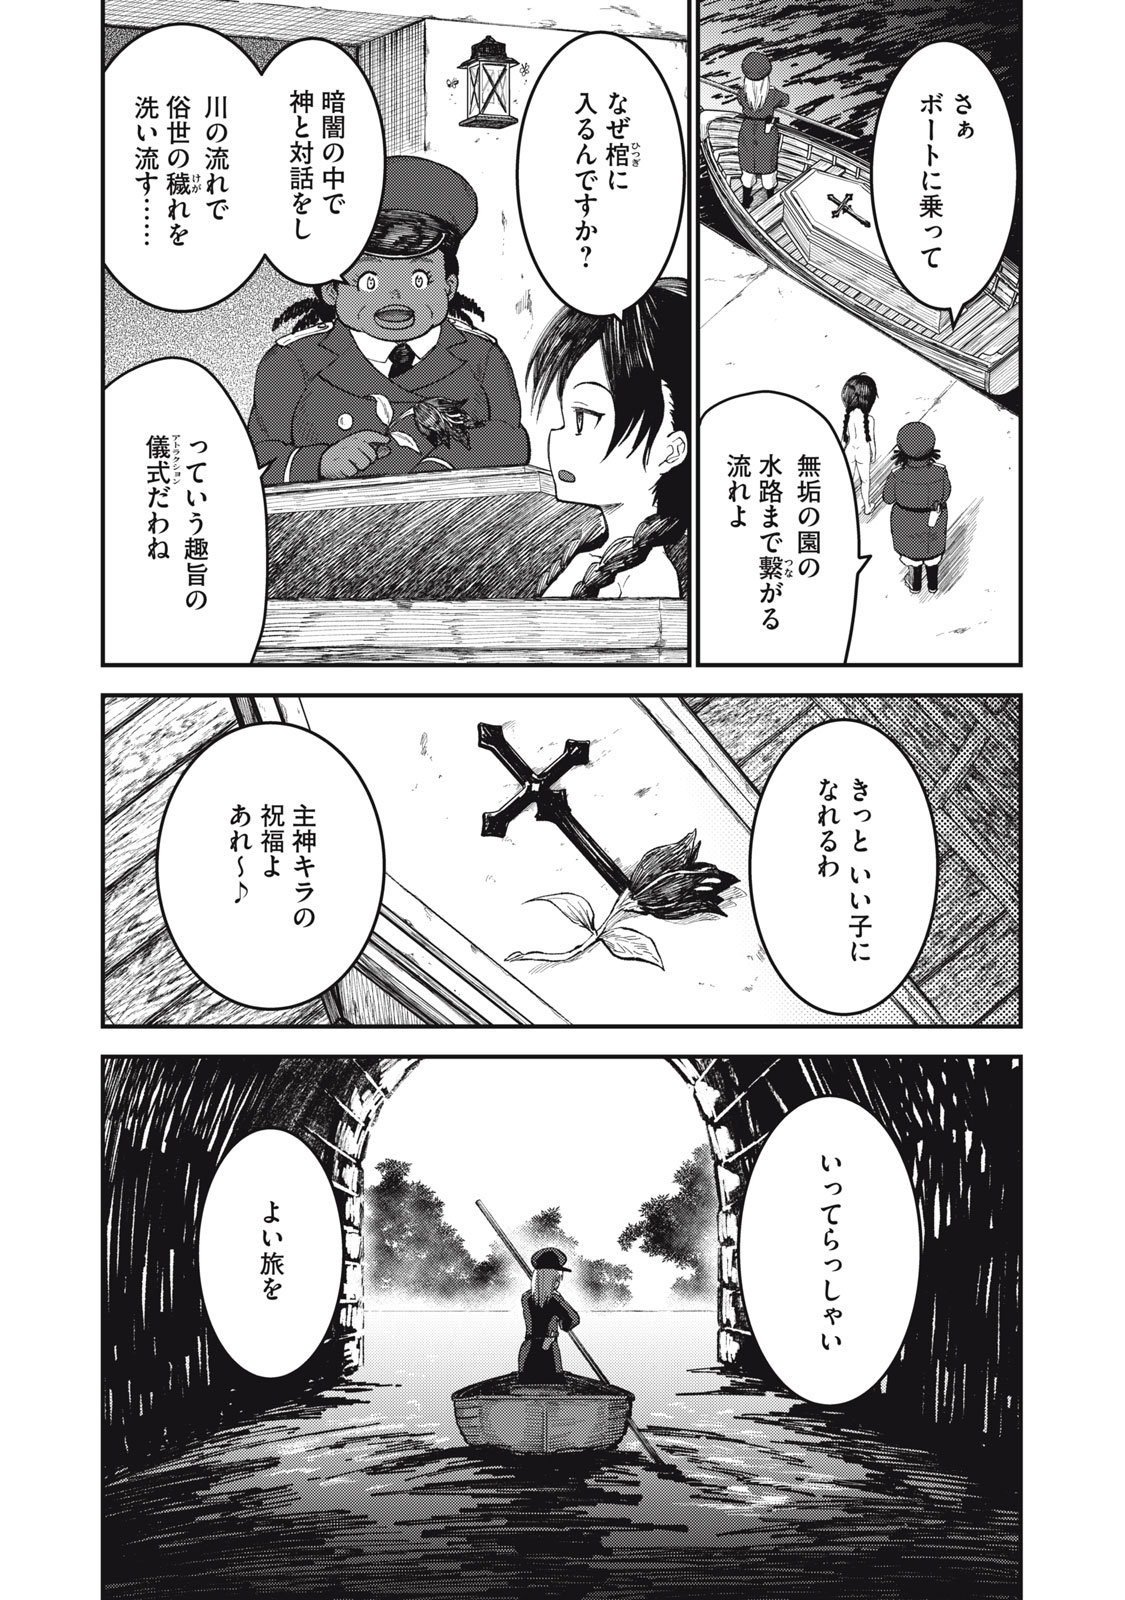 Itadaki no Lvitsa - Chapter 1 - Page 5